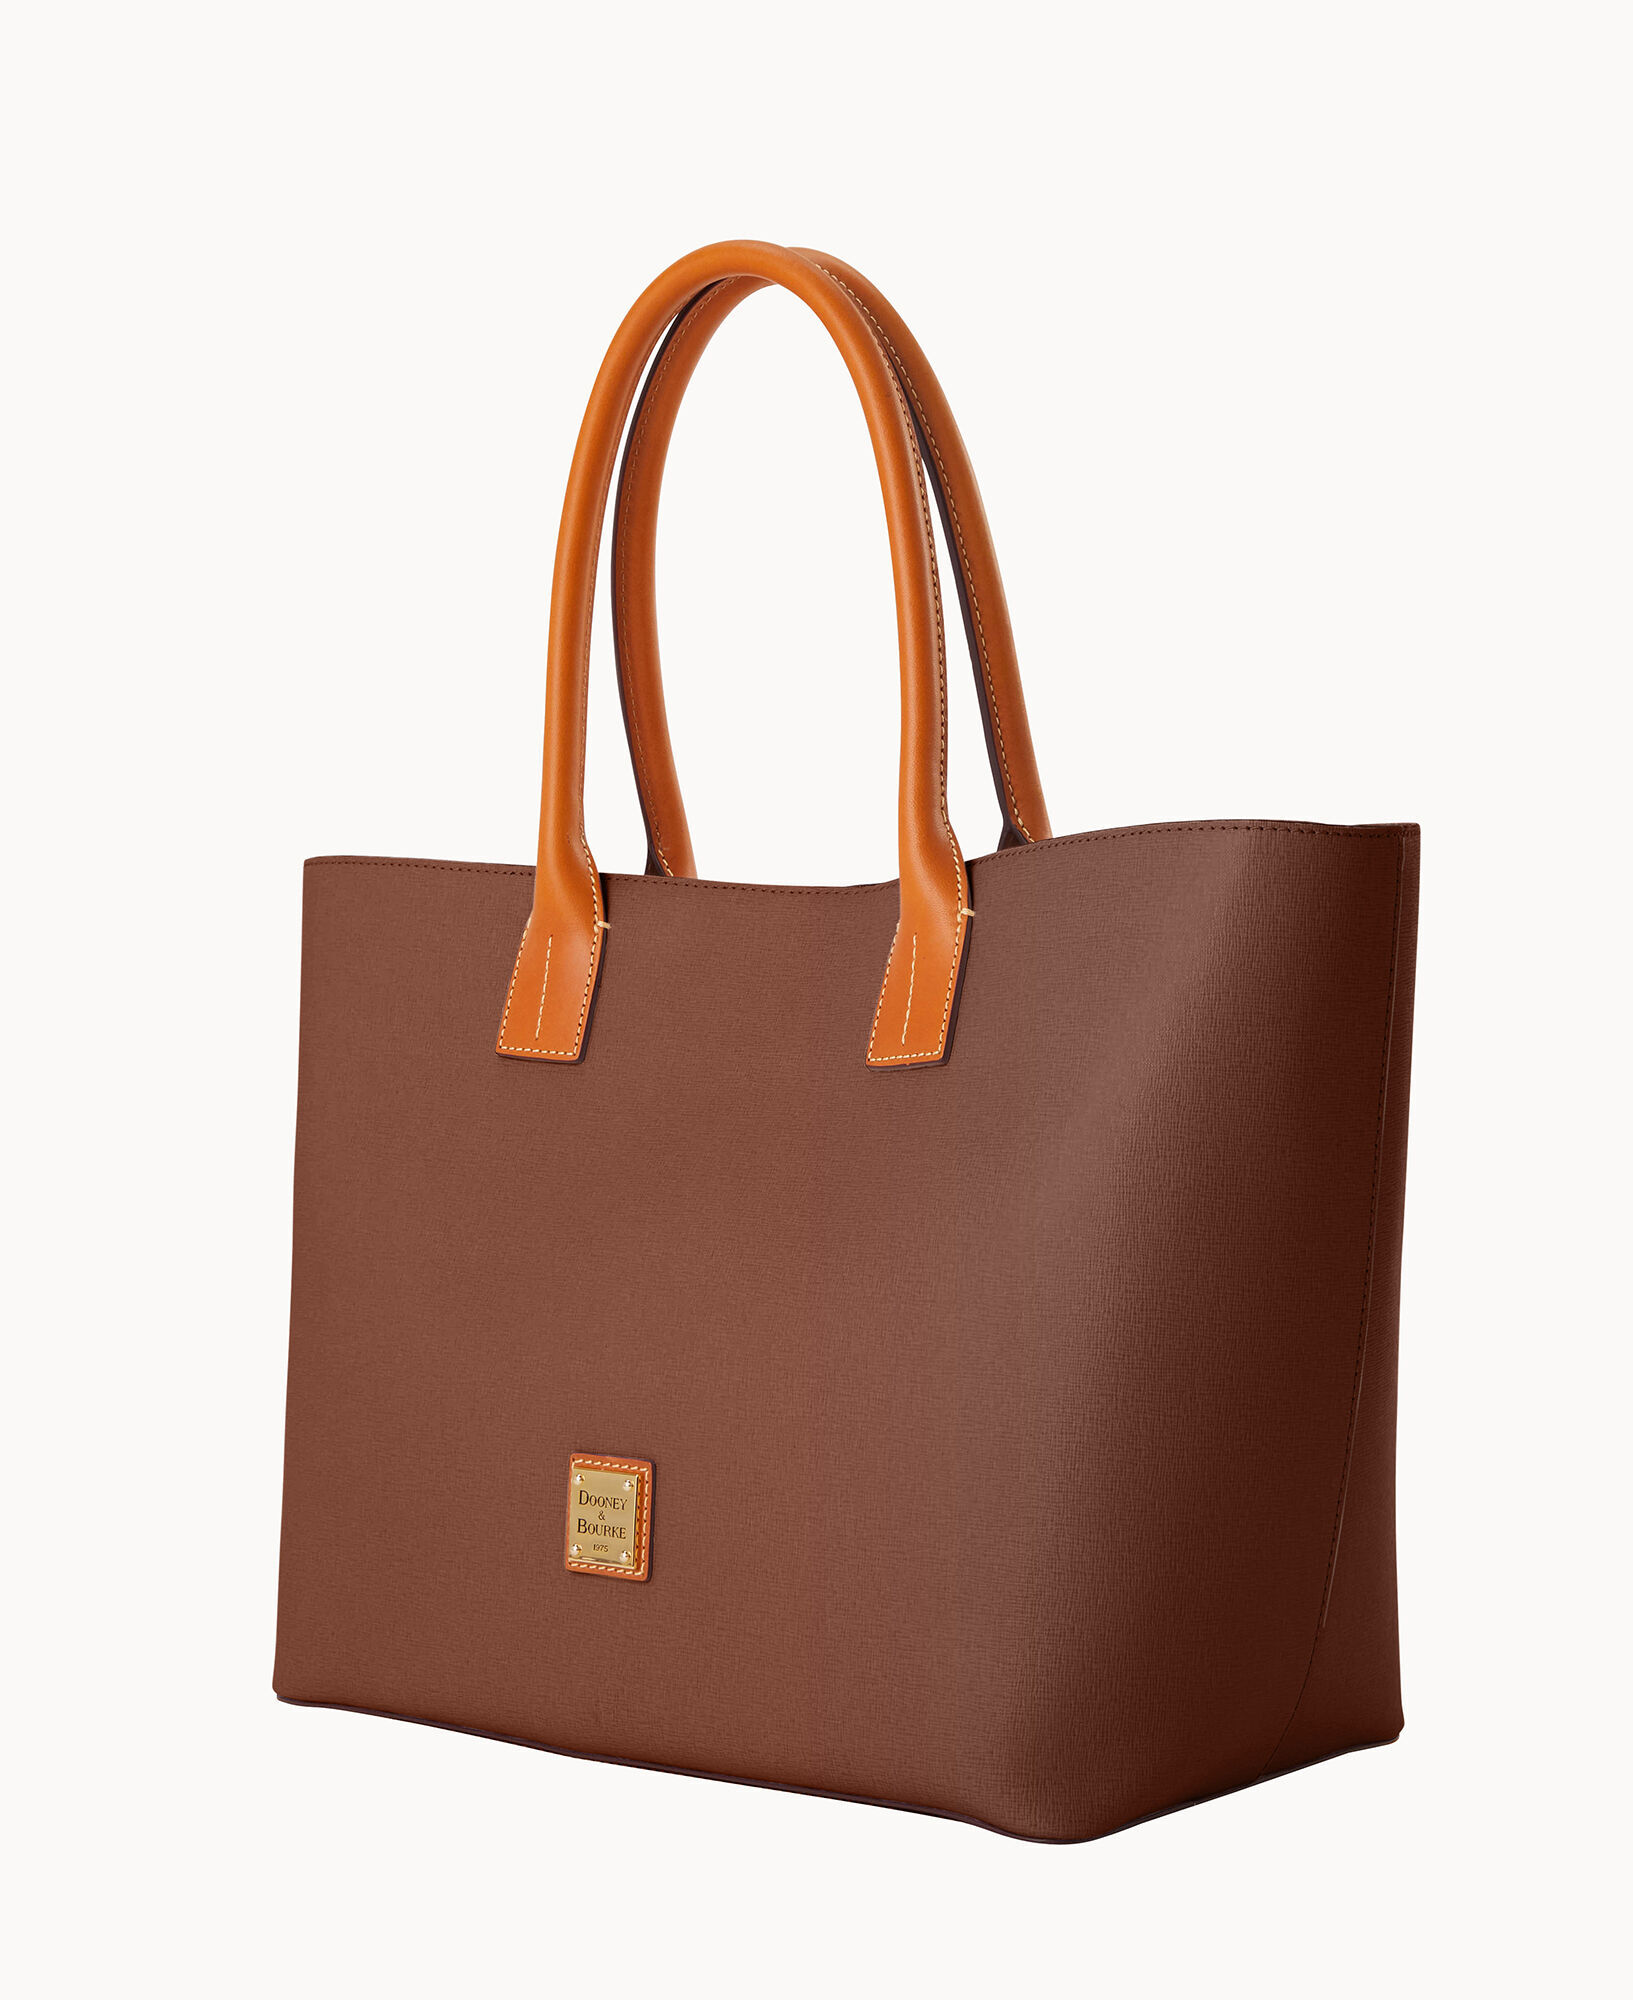 Dooney & Bourke Saffiano Shopper  Dooney, Tan shoulder bag, Saffiano  leather